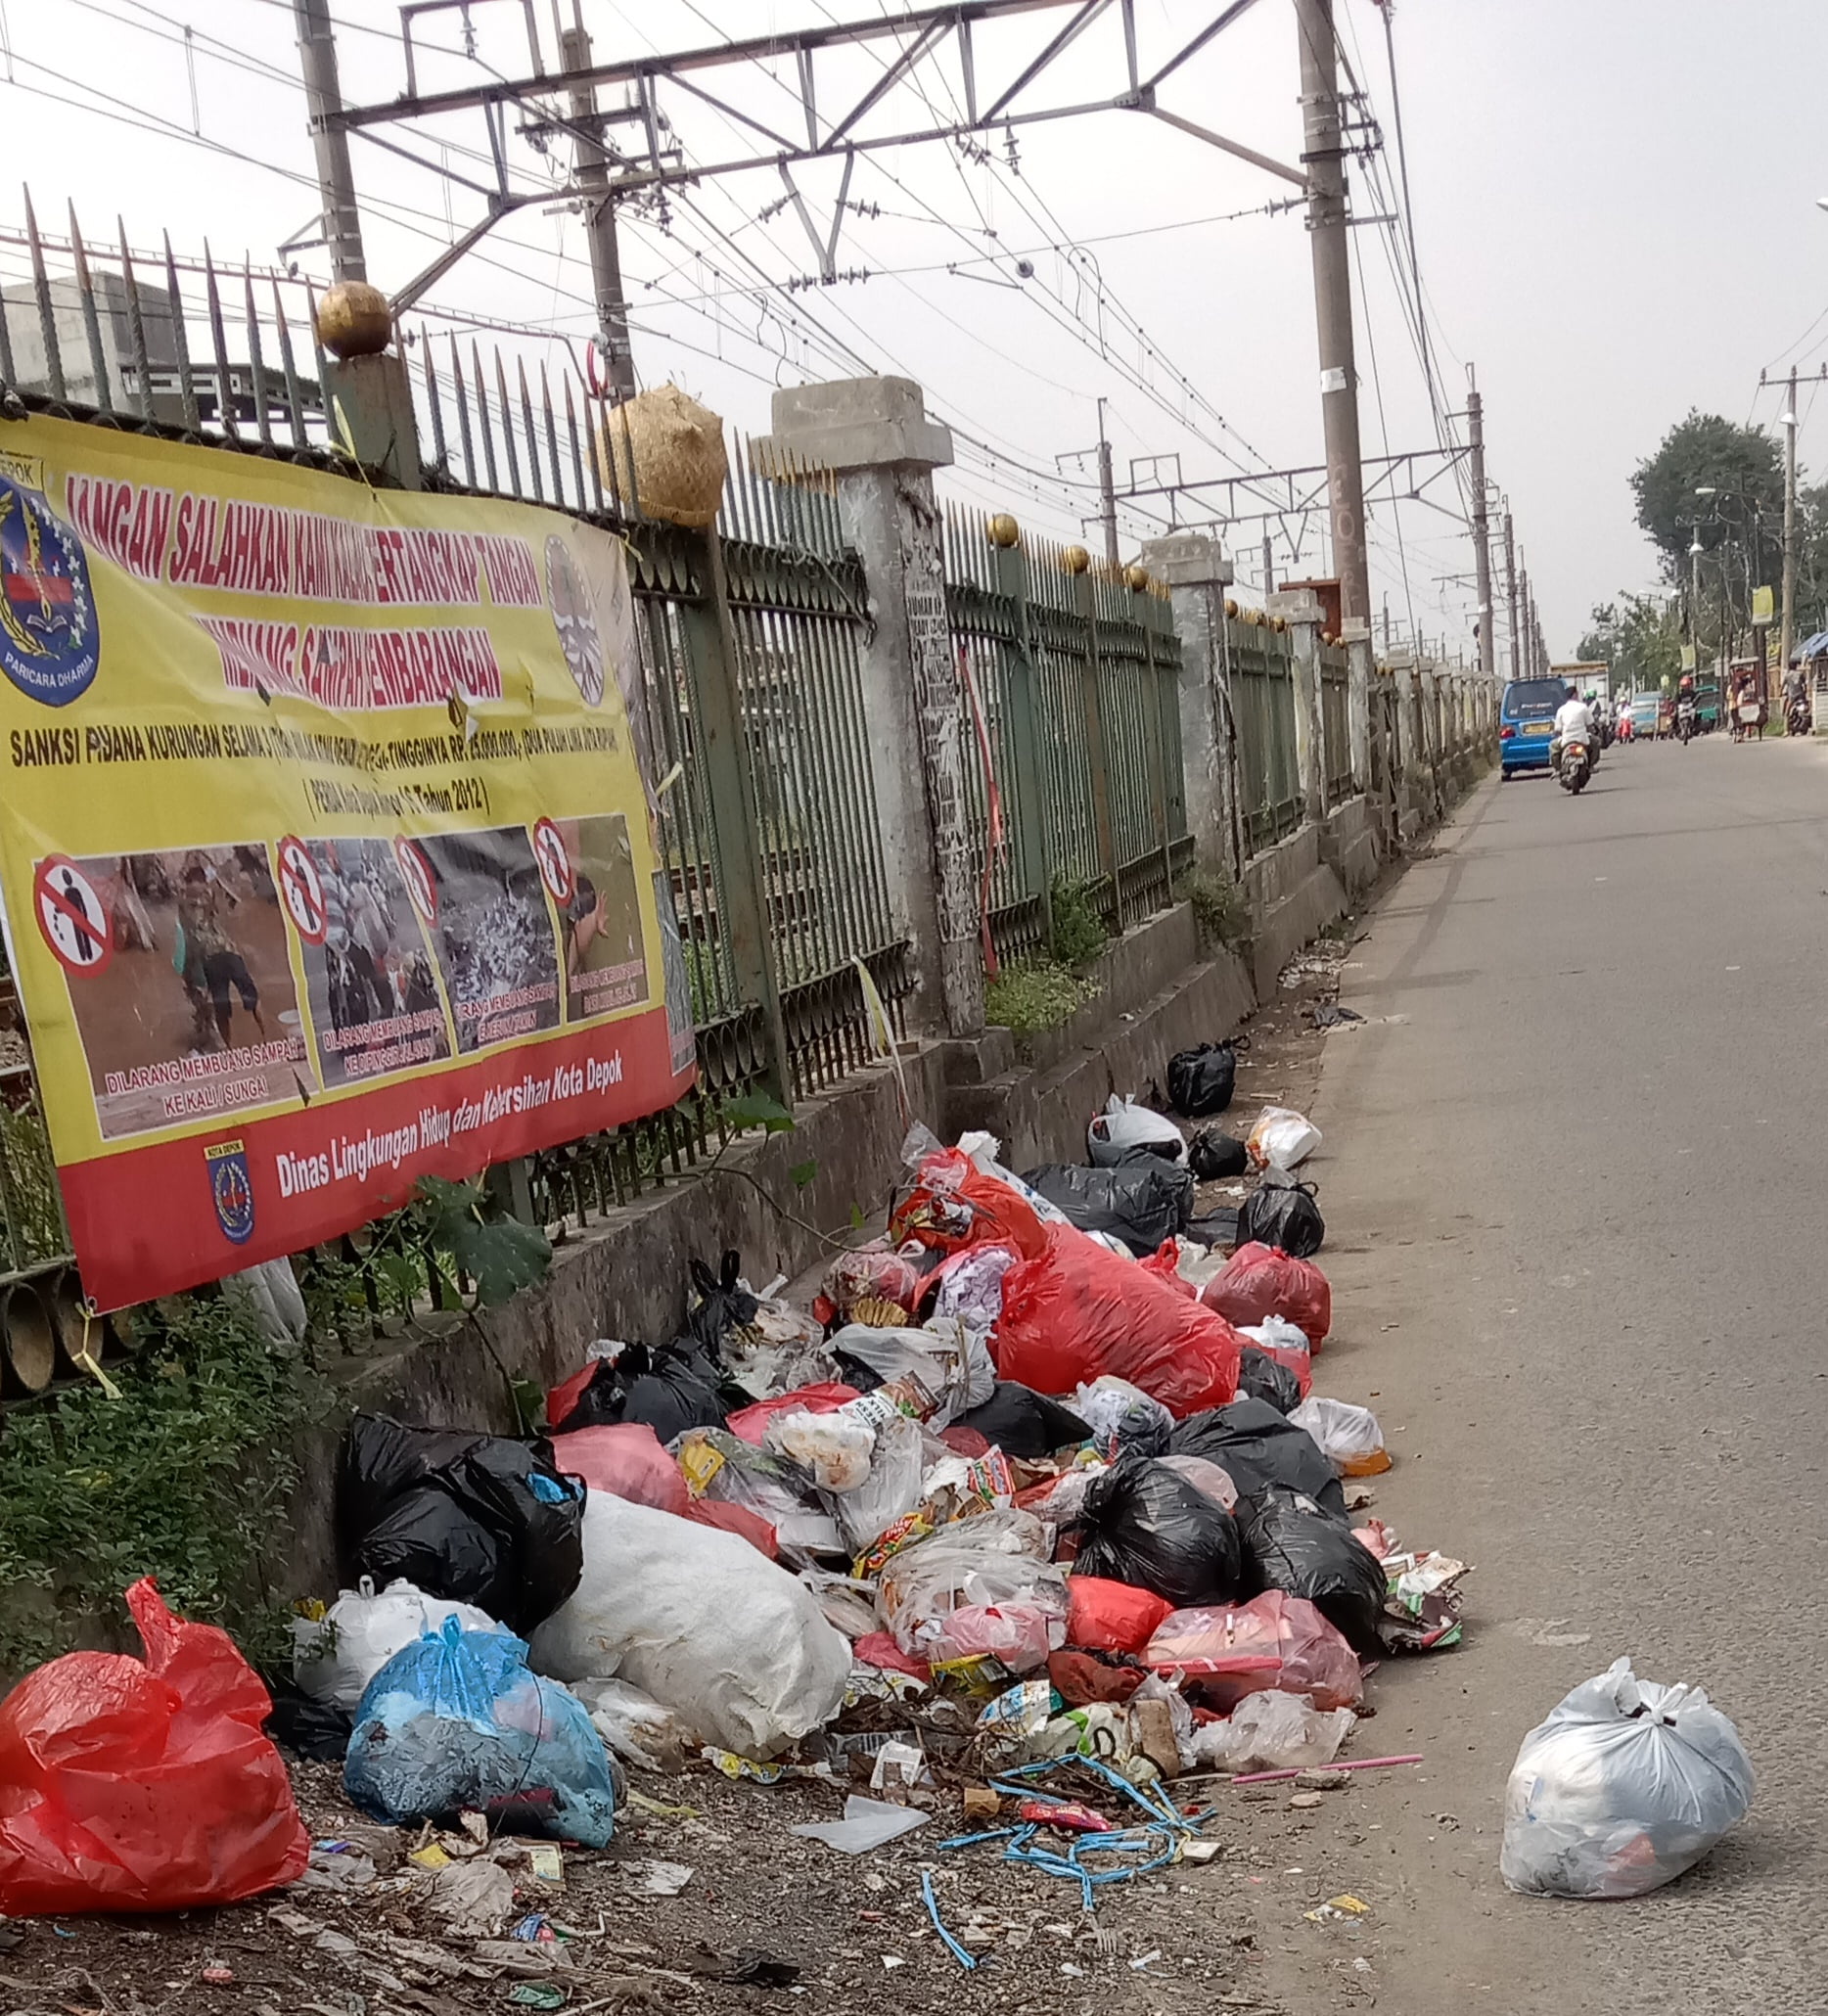 Pengendara Keluhkan Banyak Sampah Menumpuk di Jalan Raya Citayam Depok